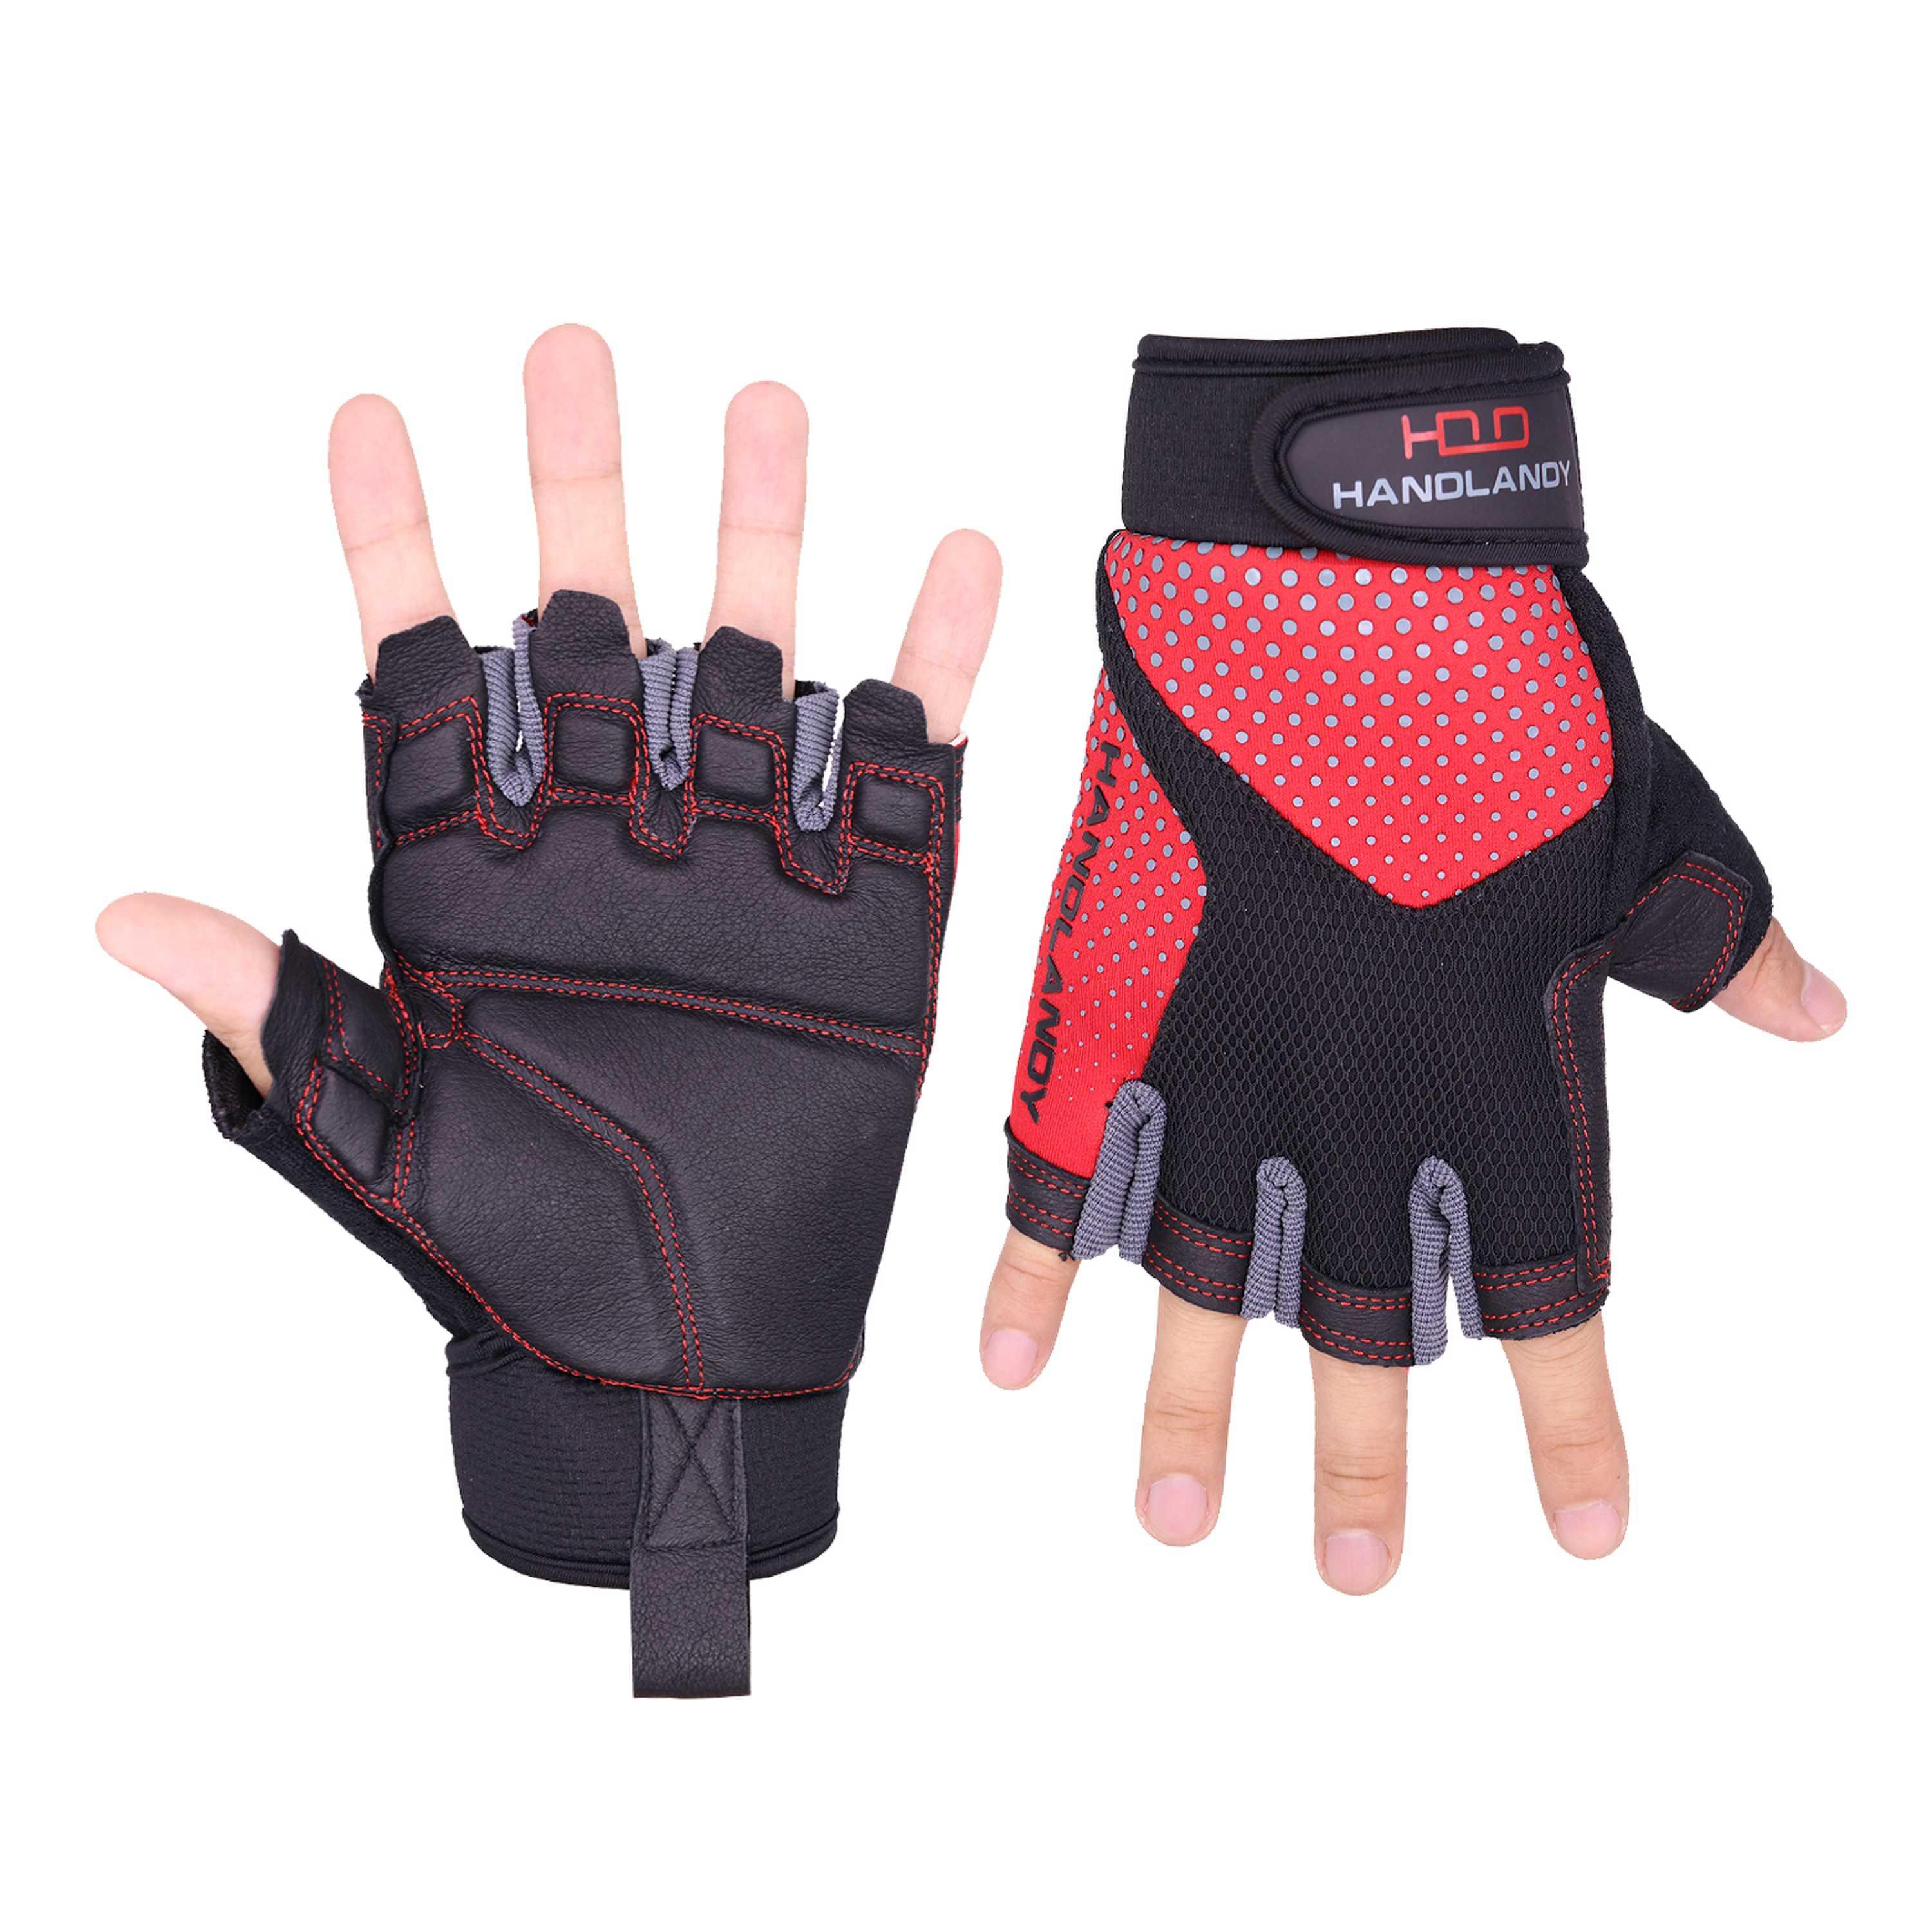 6103 PRISAFETY half finger sport winter riding motorbike racing leather motor motorcycle biker bike hand gloves